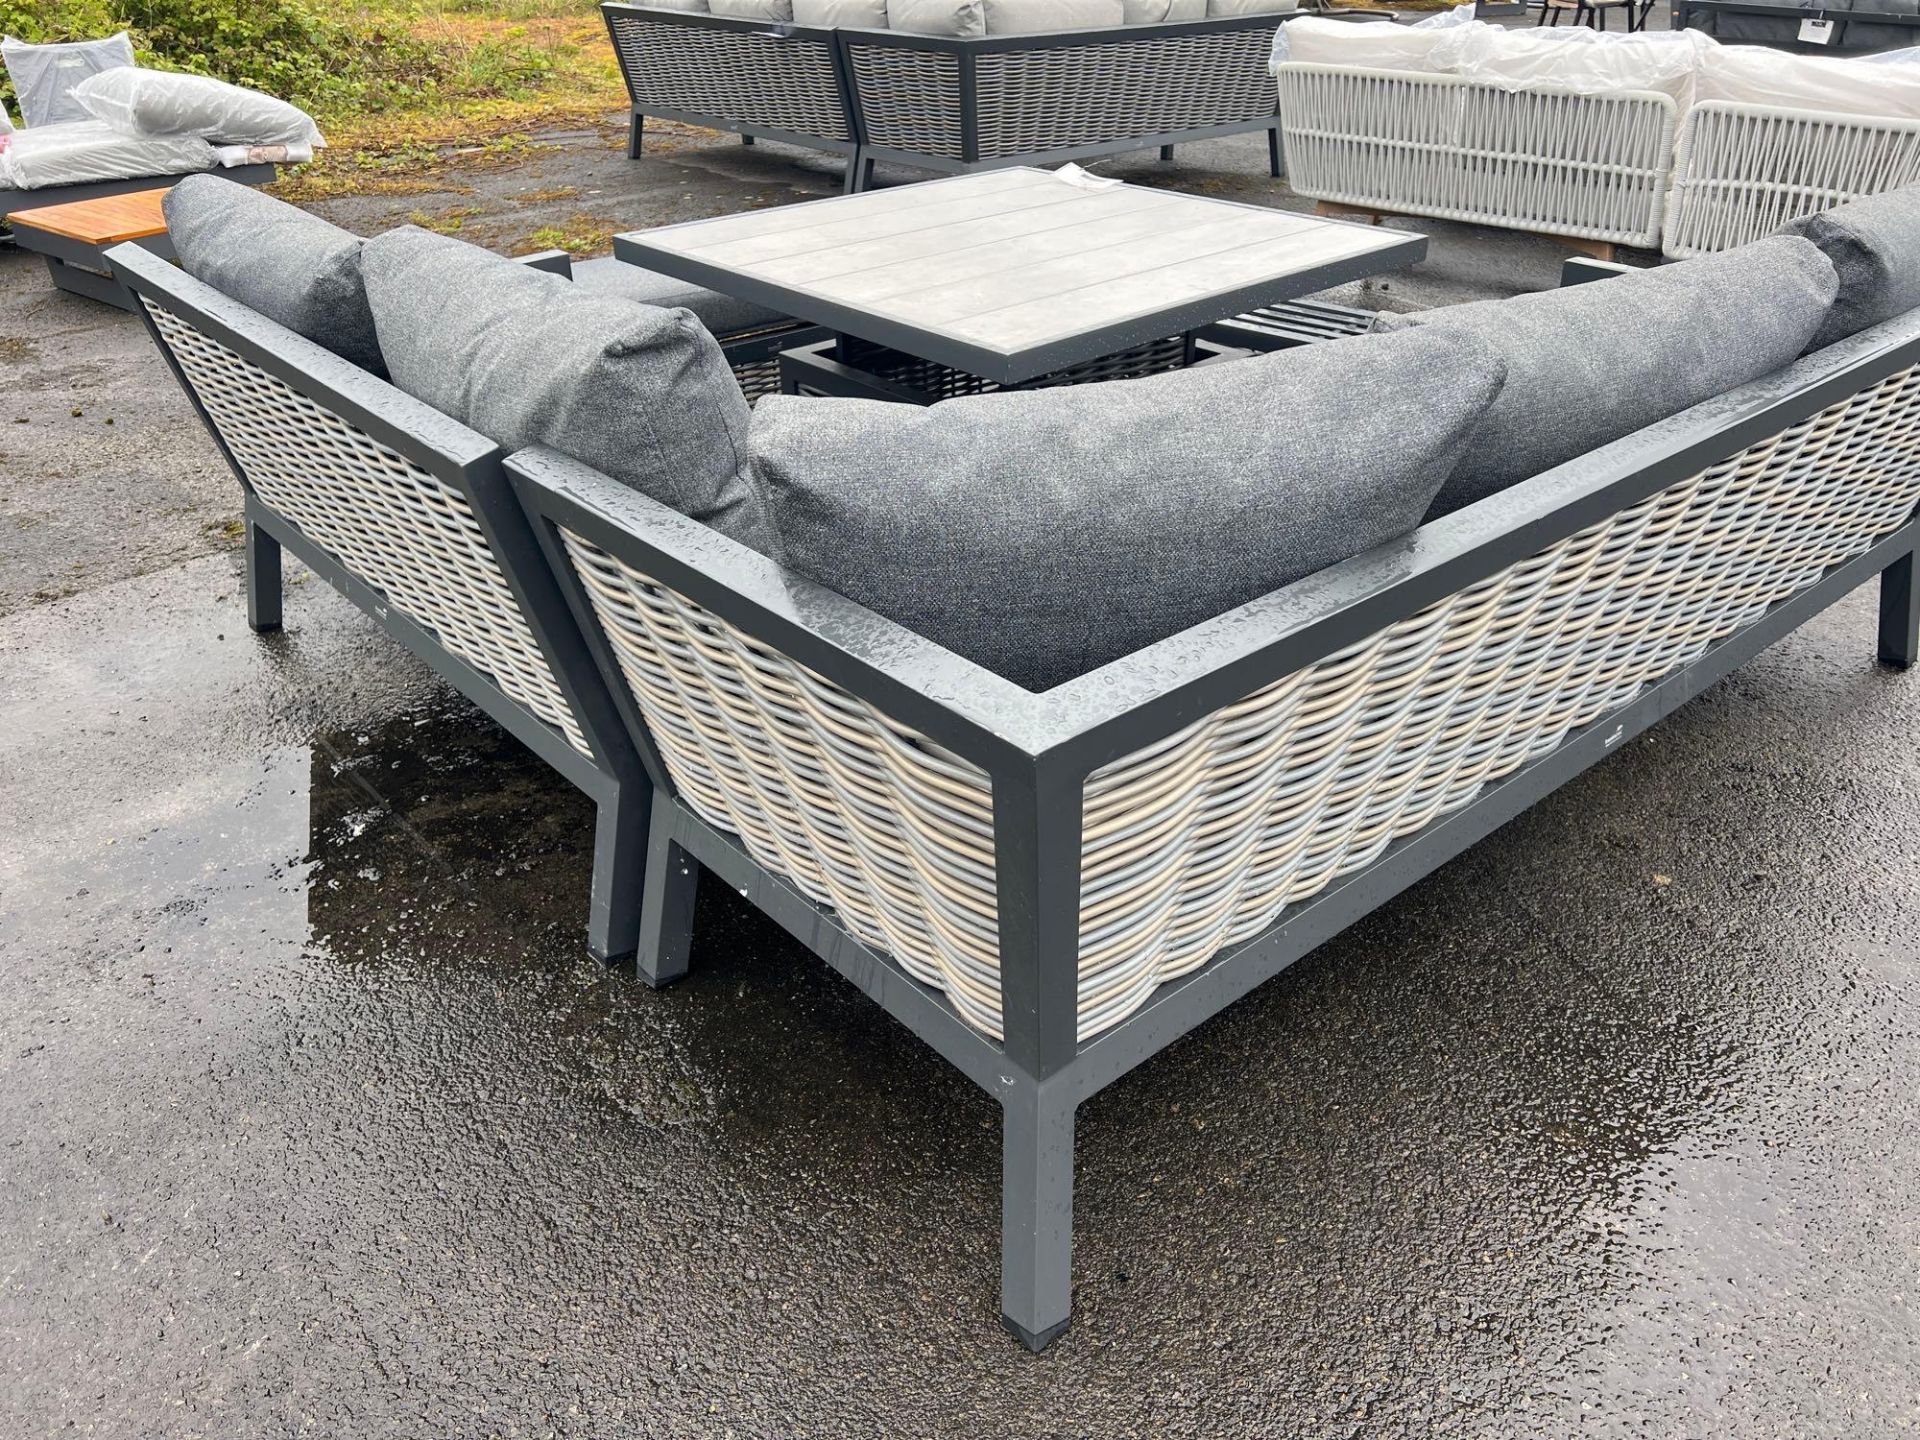 A9 Portofino Modular Sofa with Square adjustable table and 2 x benches Portofino Modular Sofa Set - Image 2 of 4